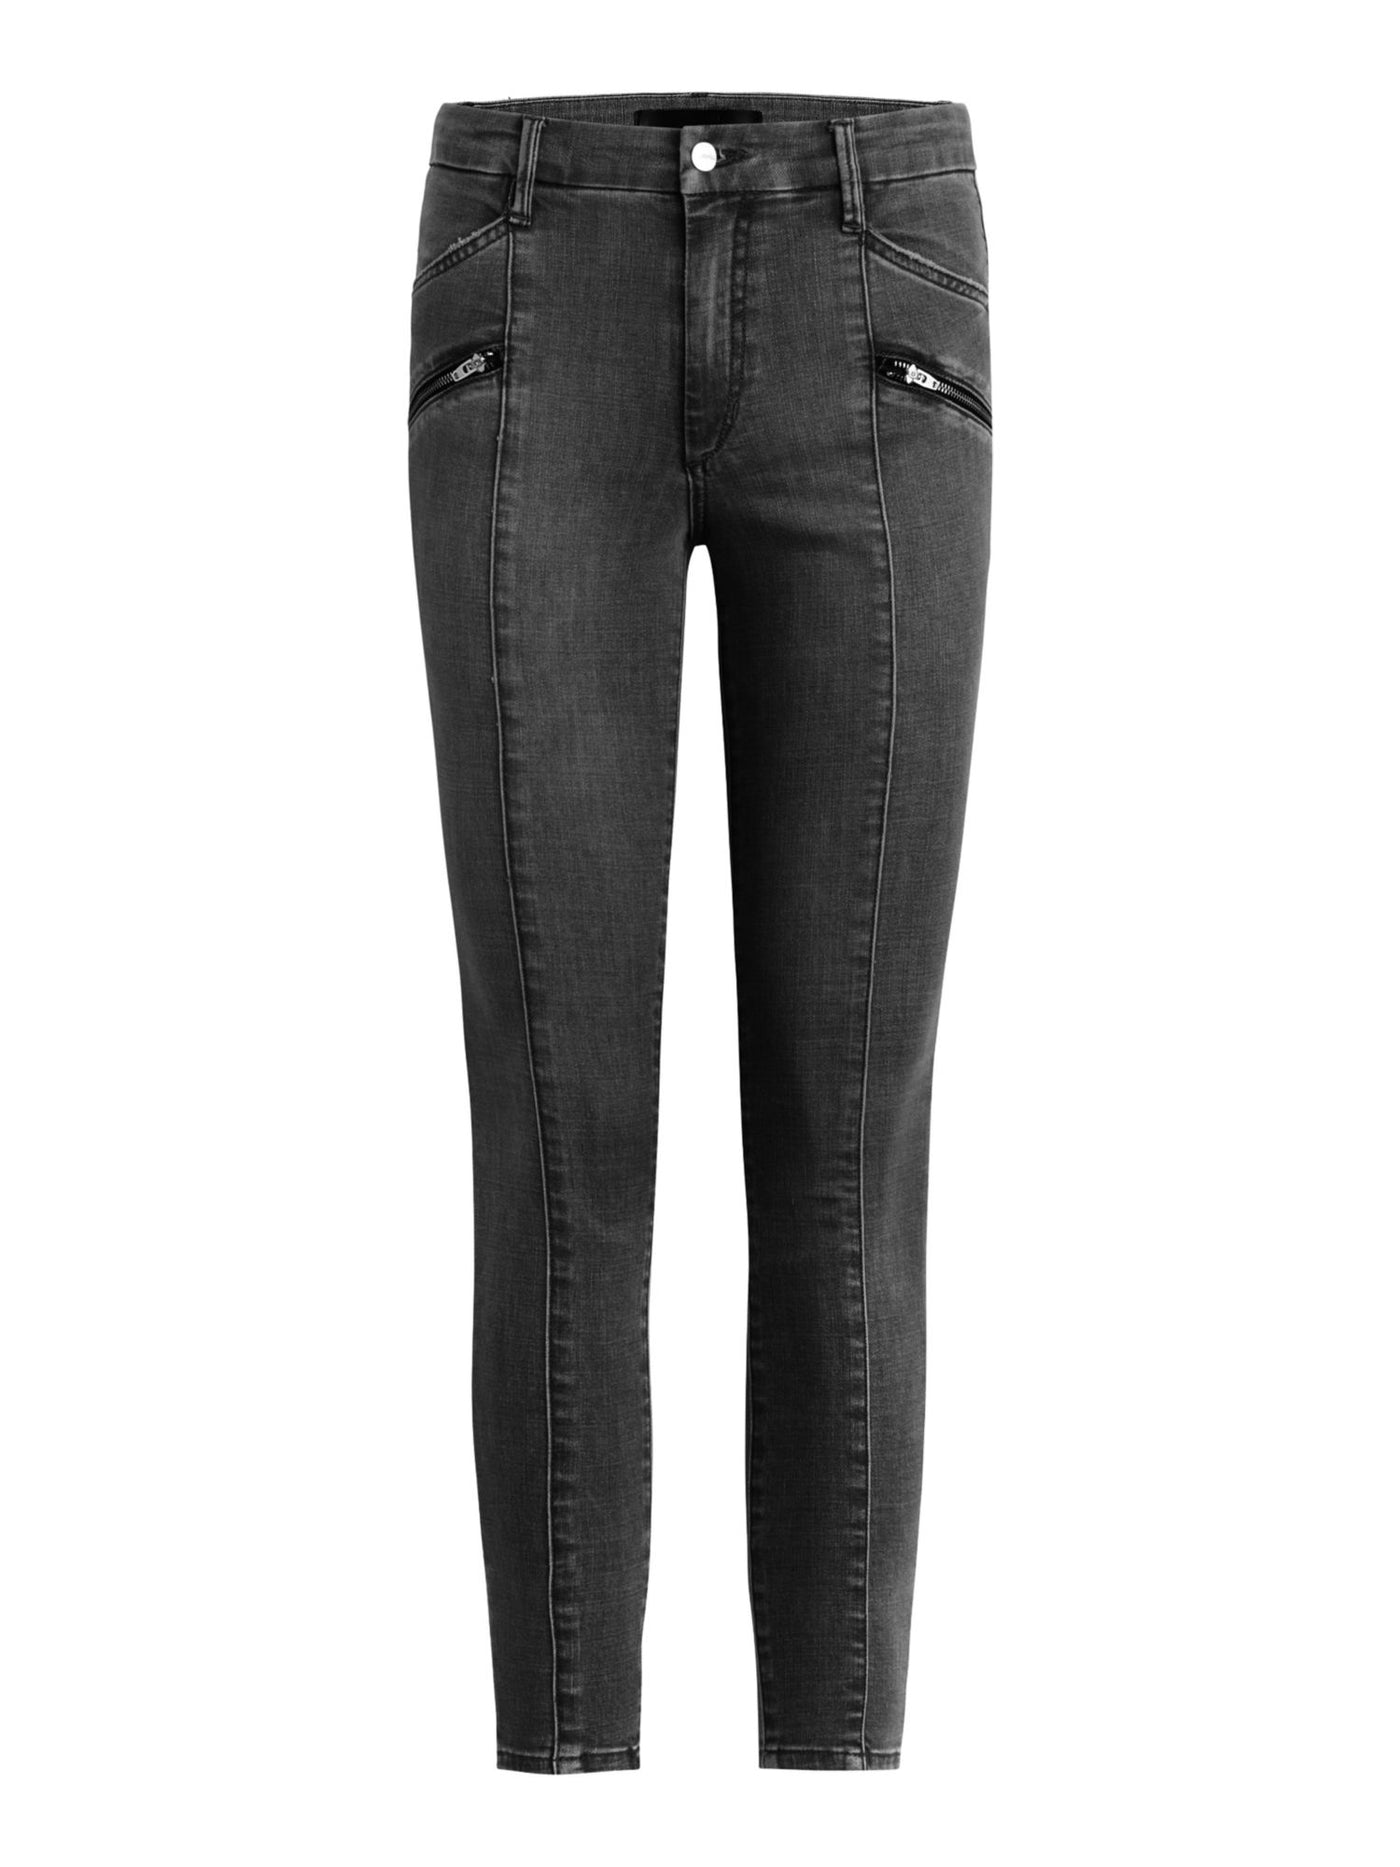 JOE'S Womens Black Zippered Moto Ankle Skinny Jeans Size: 25 Waist